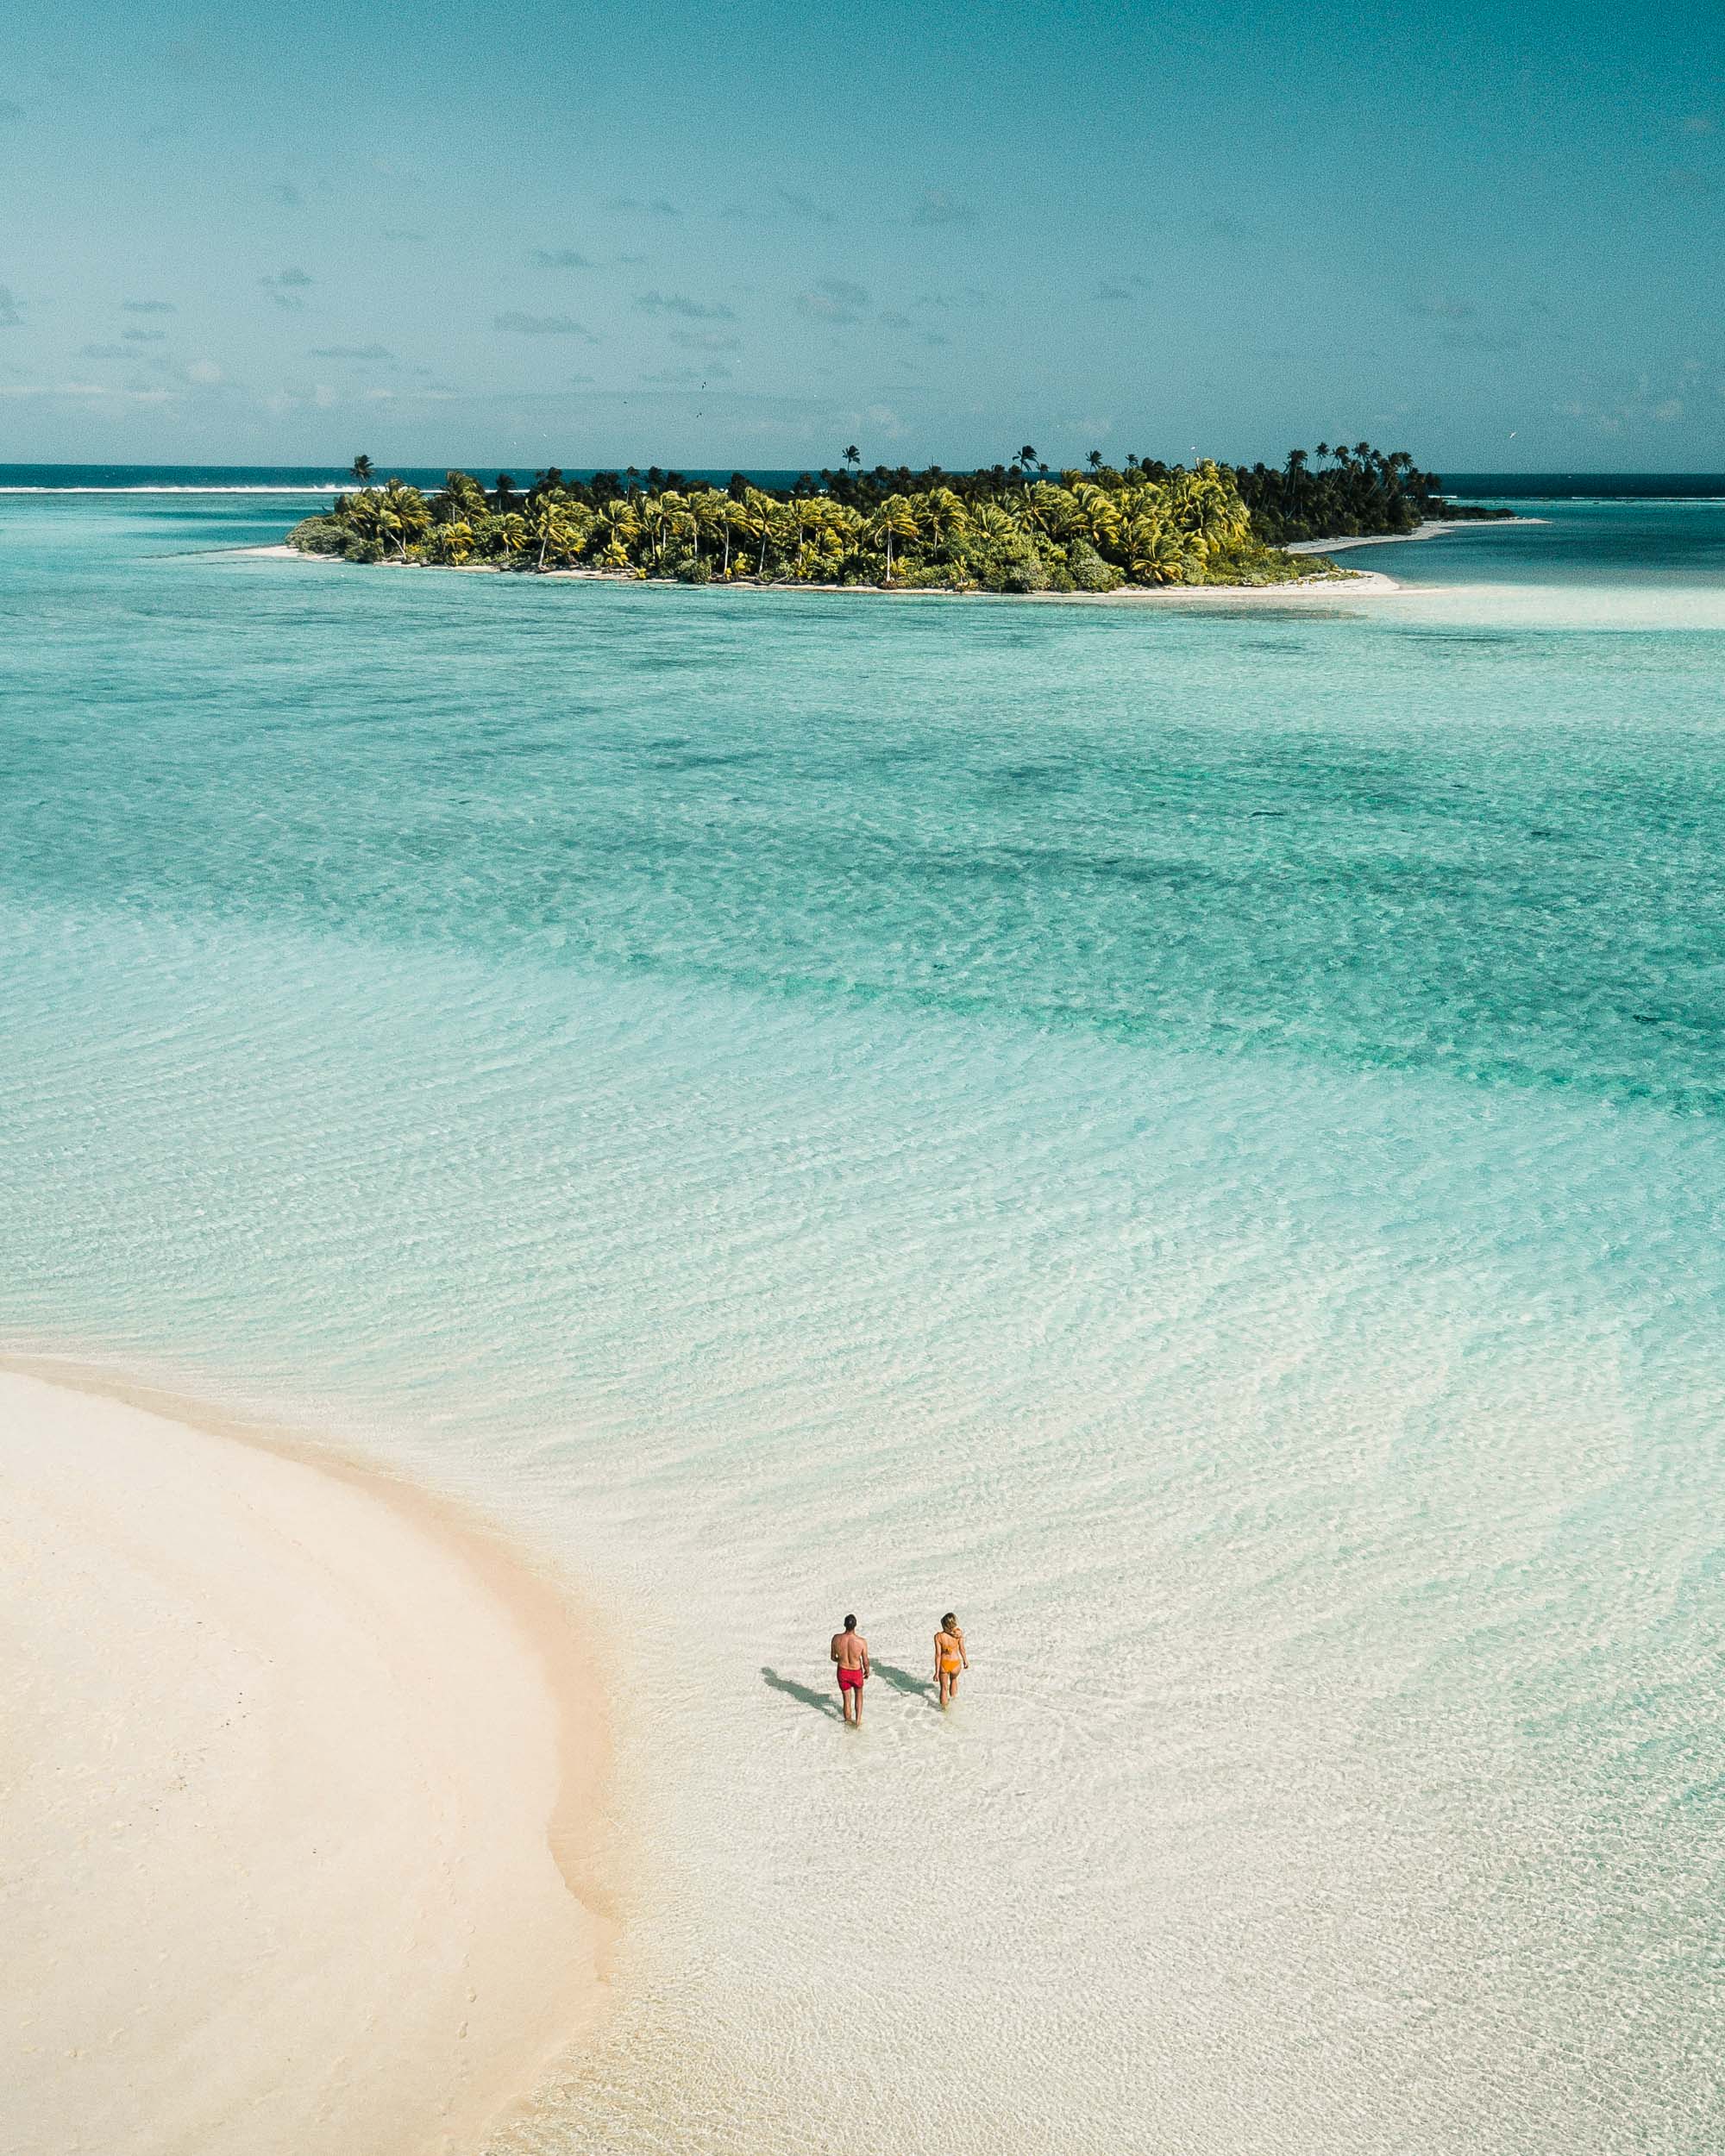 Honeymoon island turquoise water and sandbars in the Cook Islands